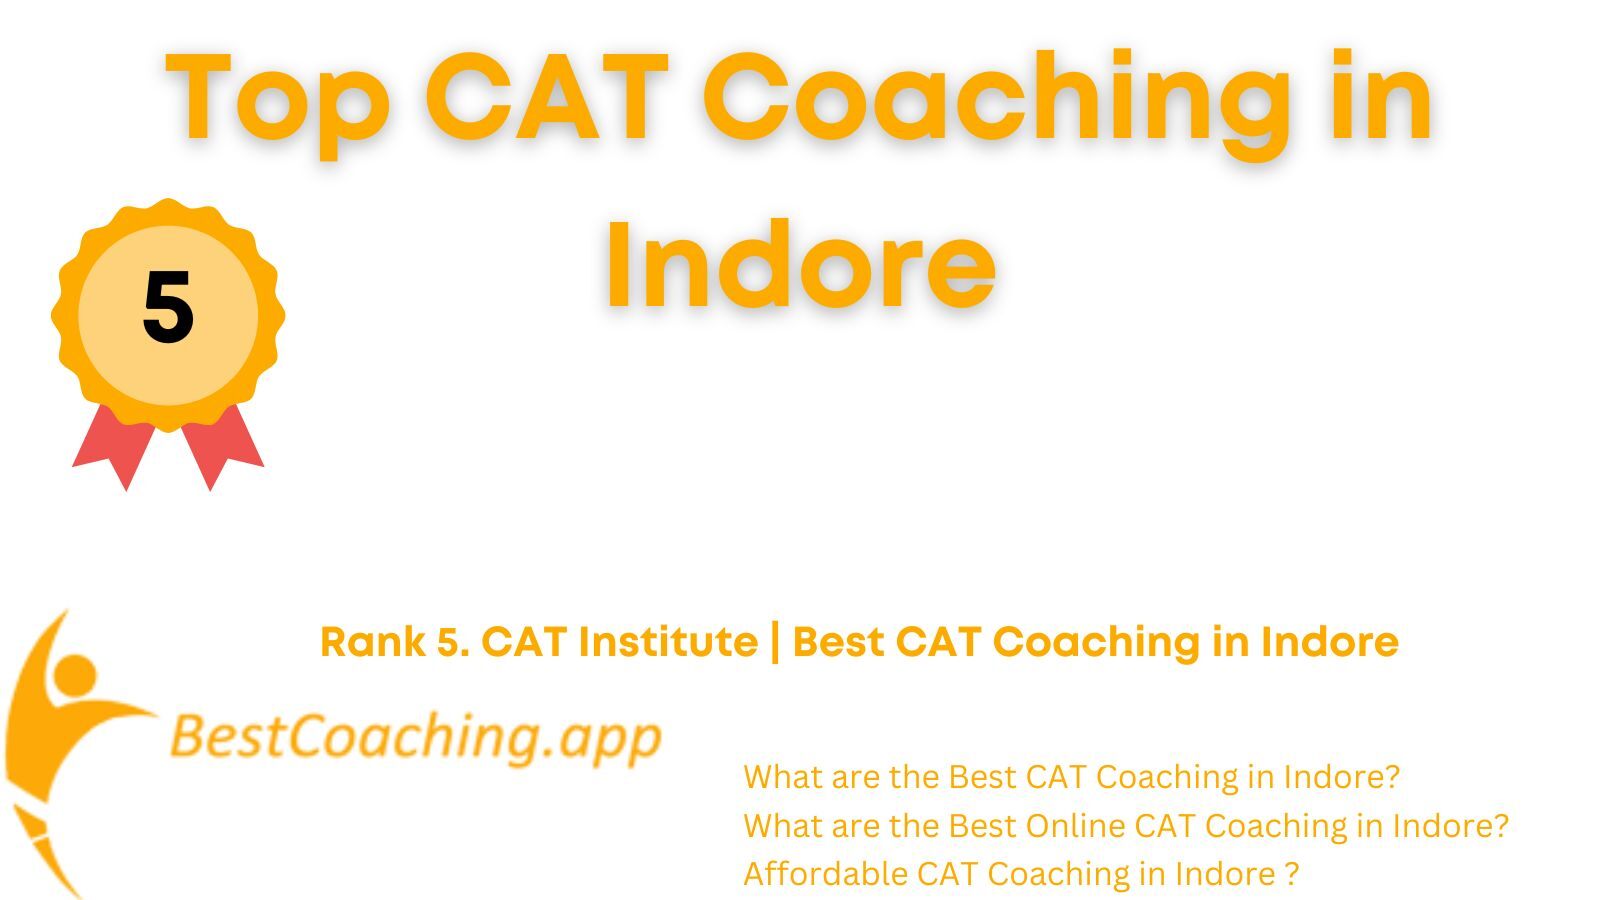 Rank 5. CAT Institute Best CAT Coaching in Indore